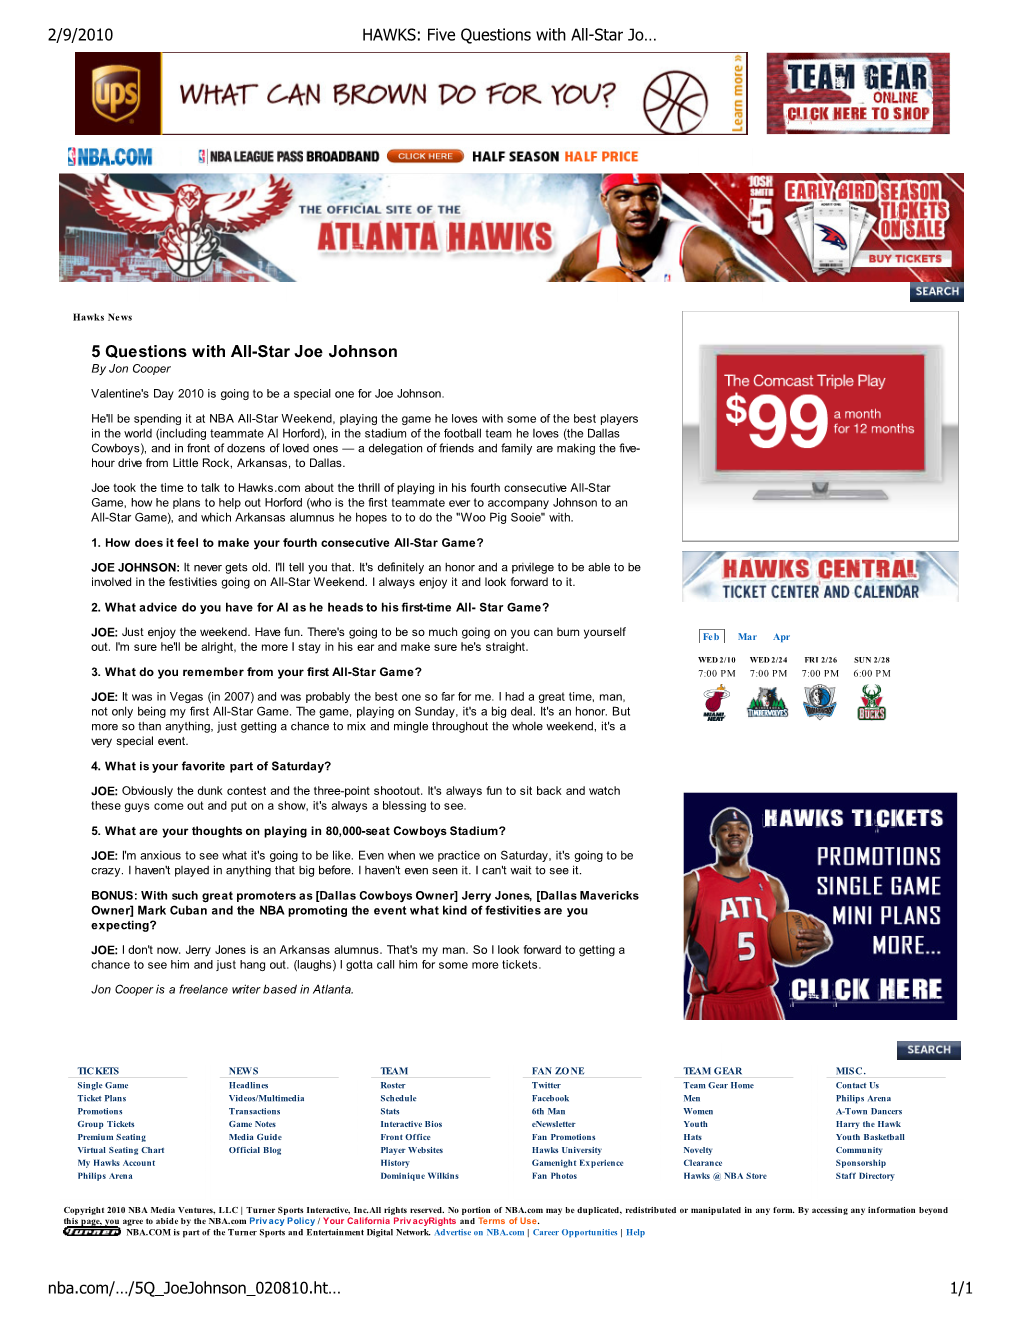 HAWKS: Five Questions with All-Star Joe Johnson